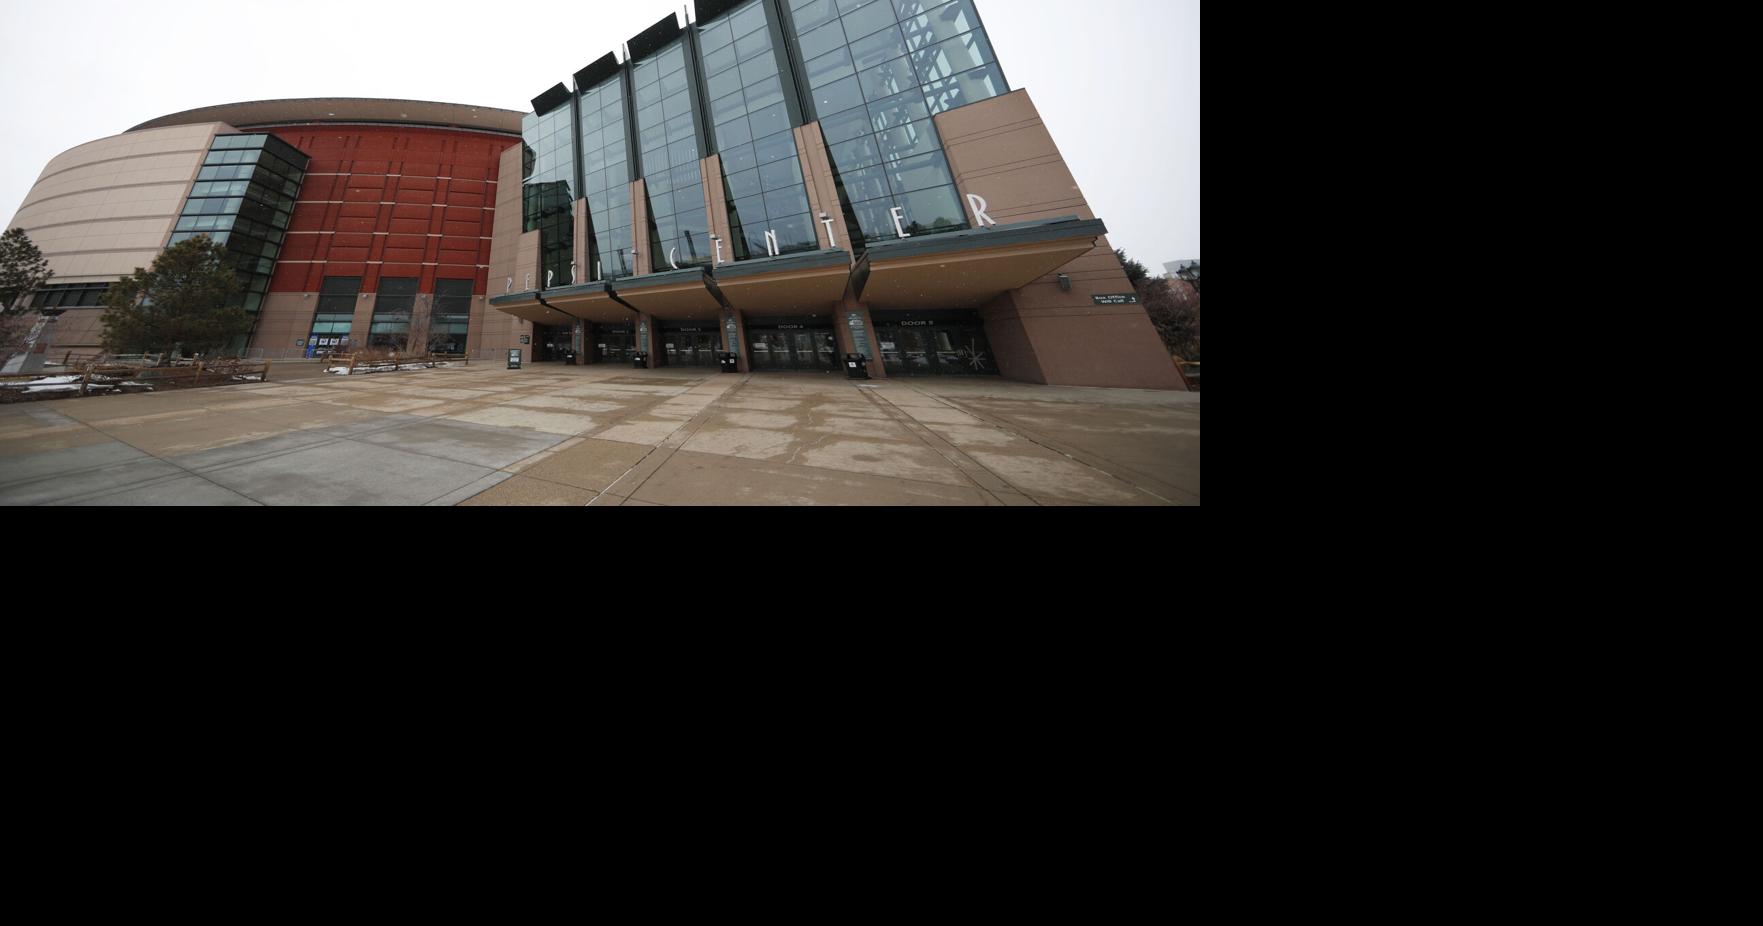 Denver sports arena Pepsi Center renamed Ball Arena